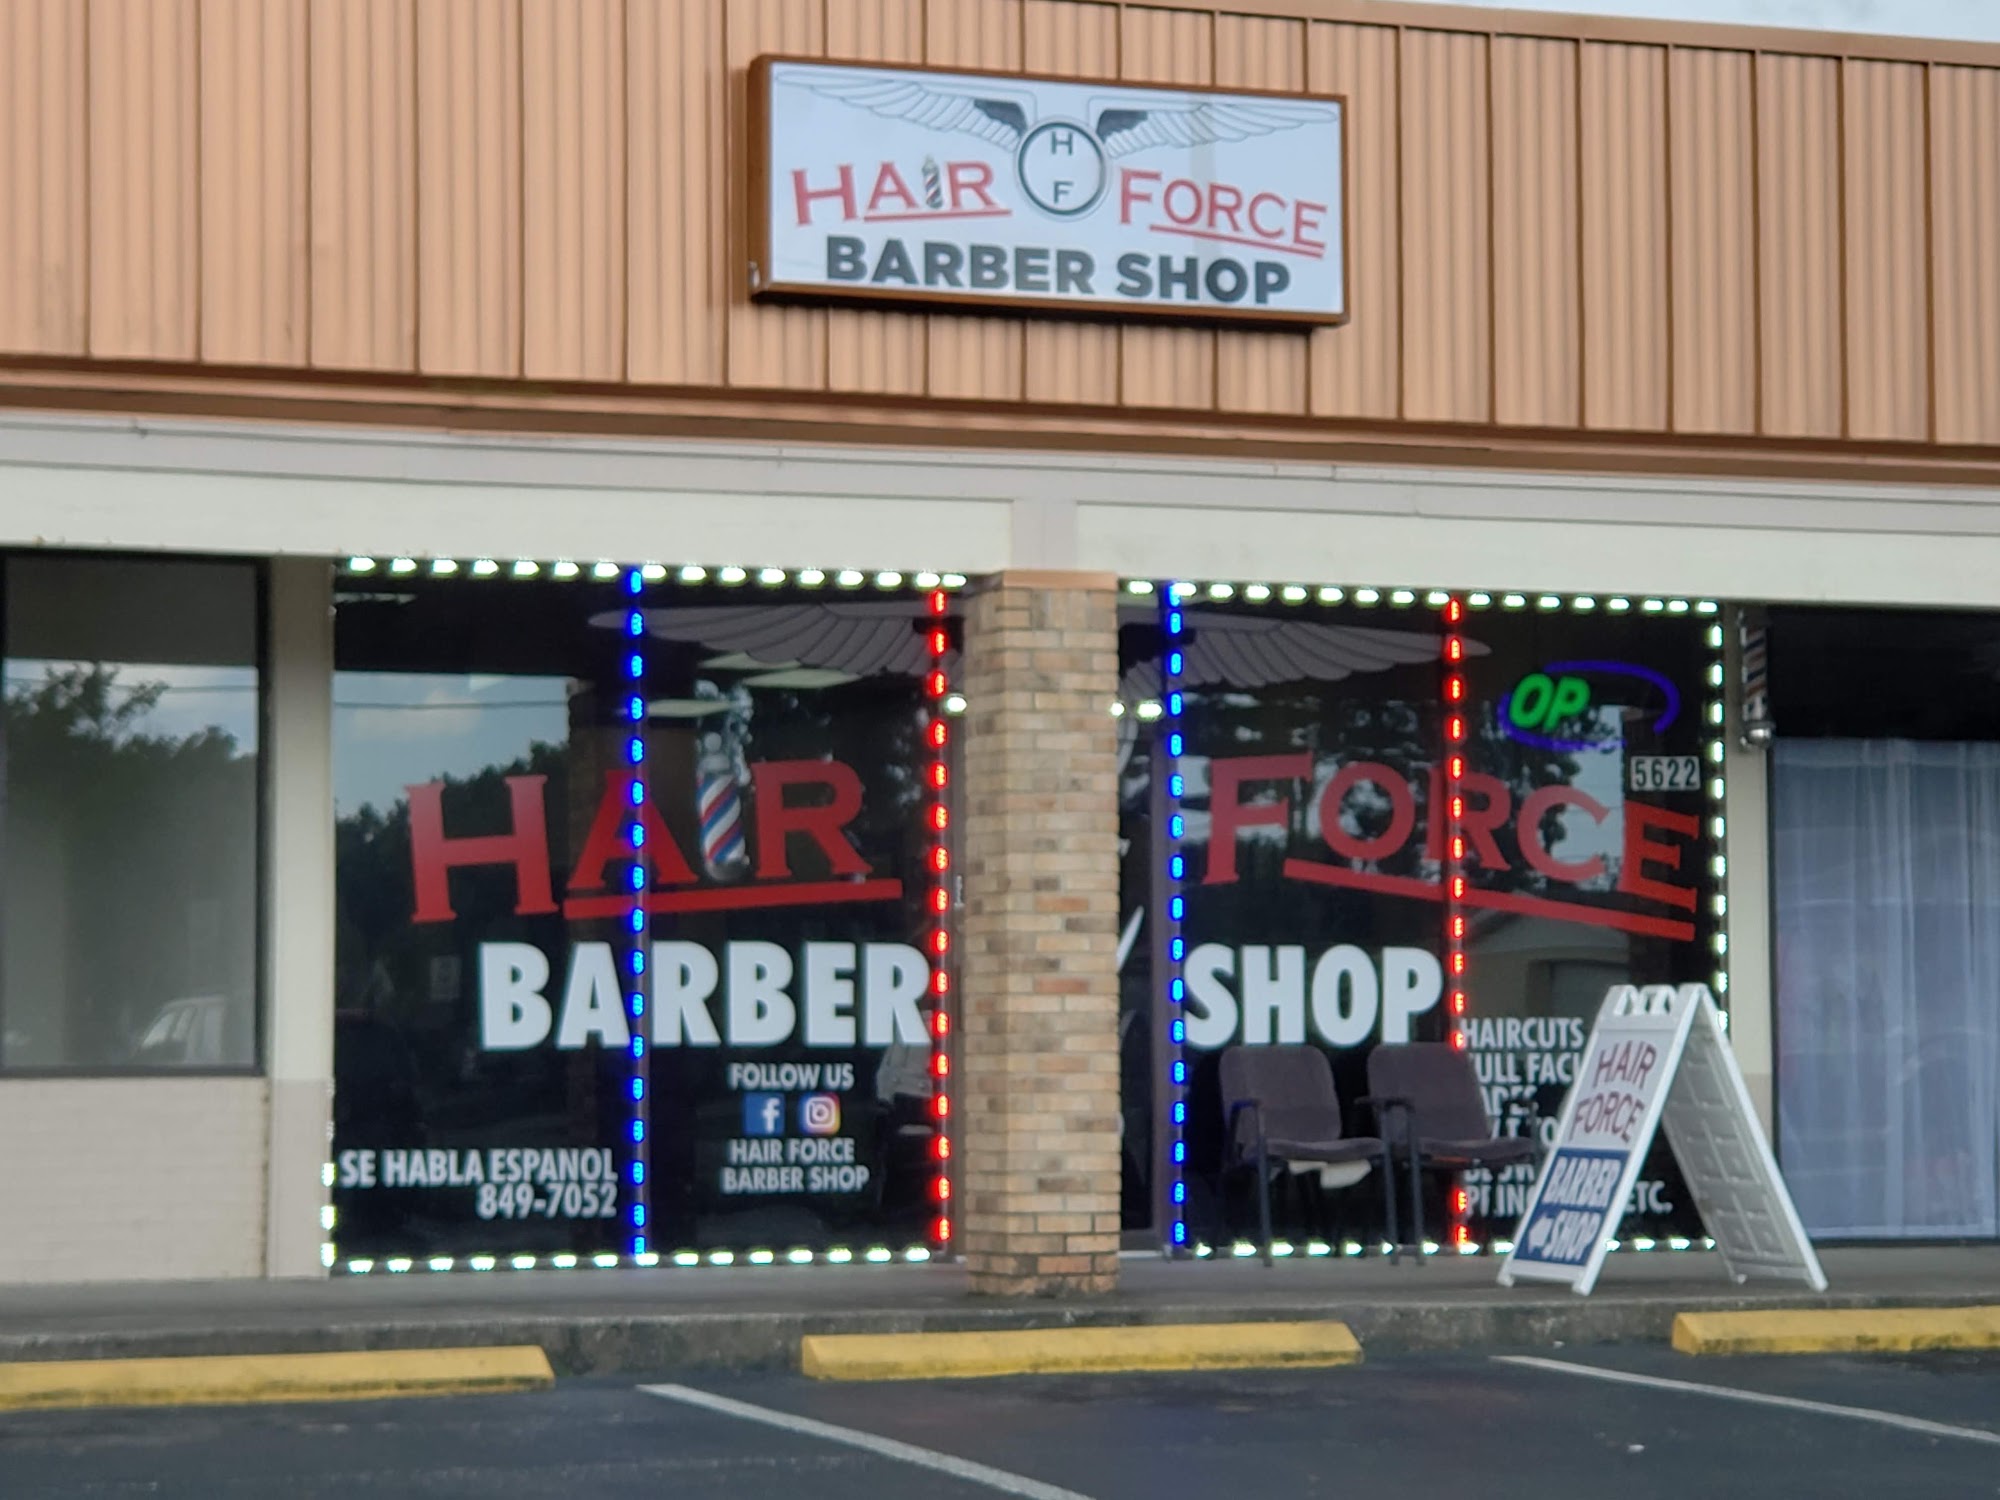 Hair Force barber shop